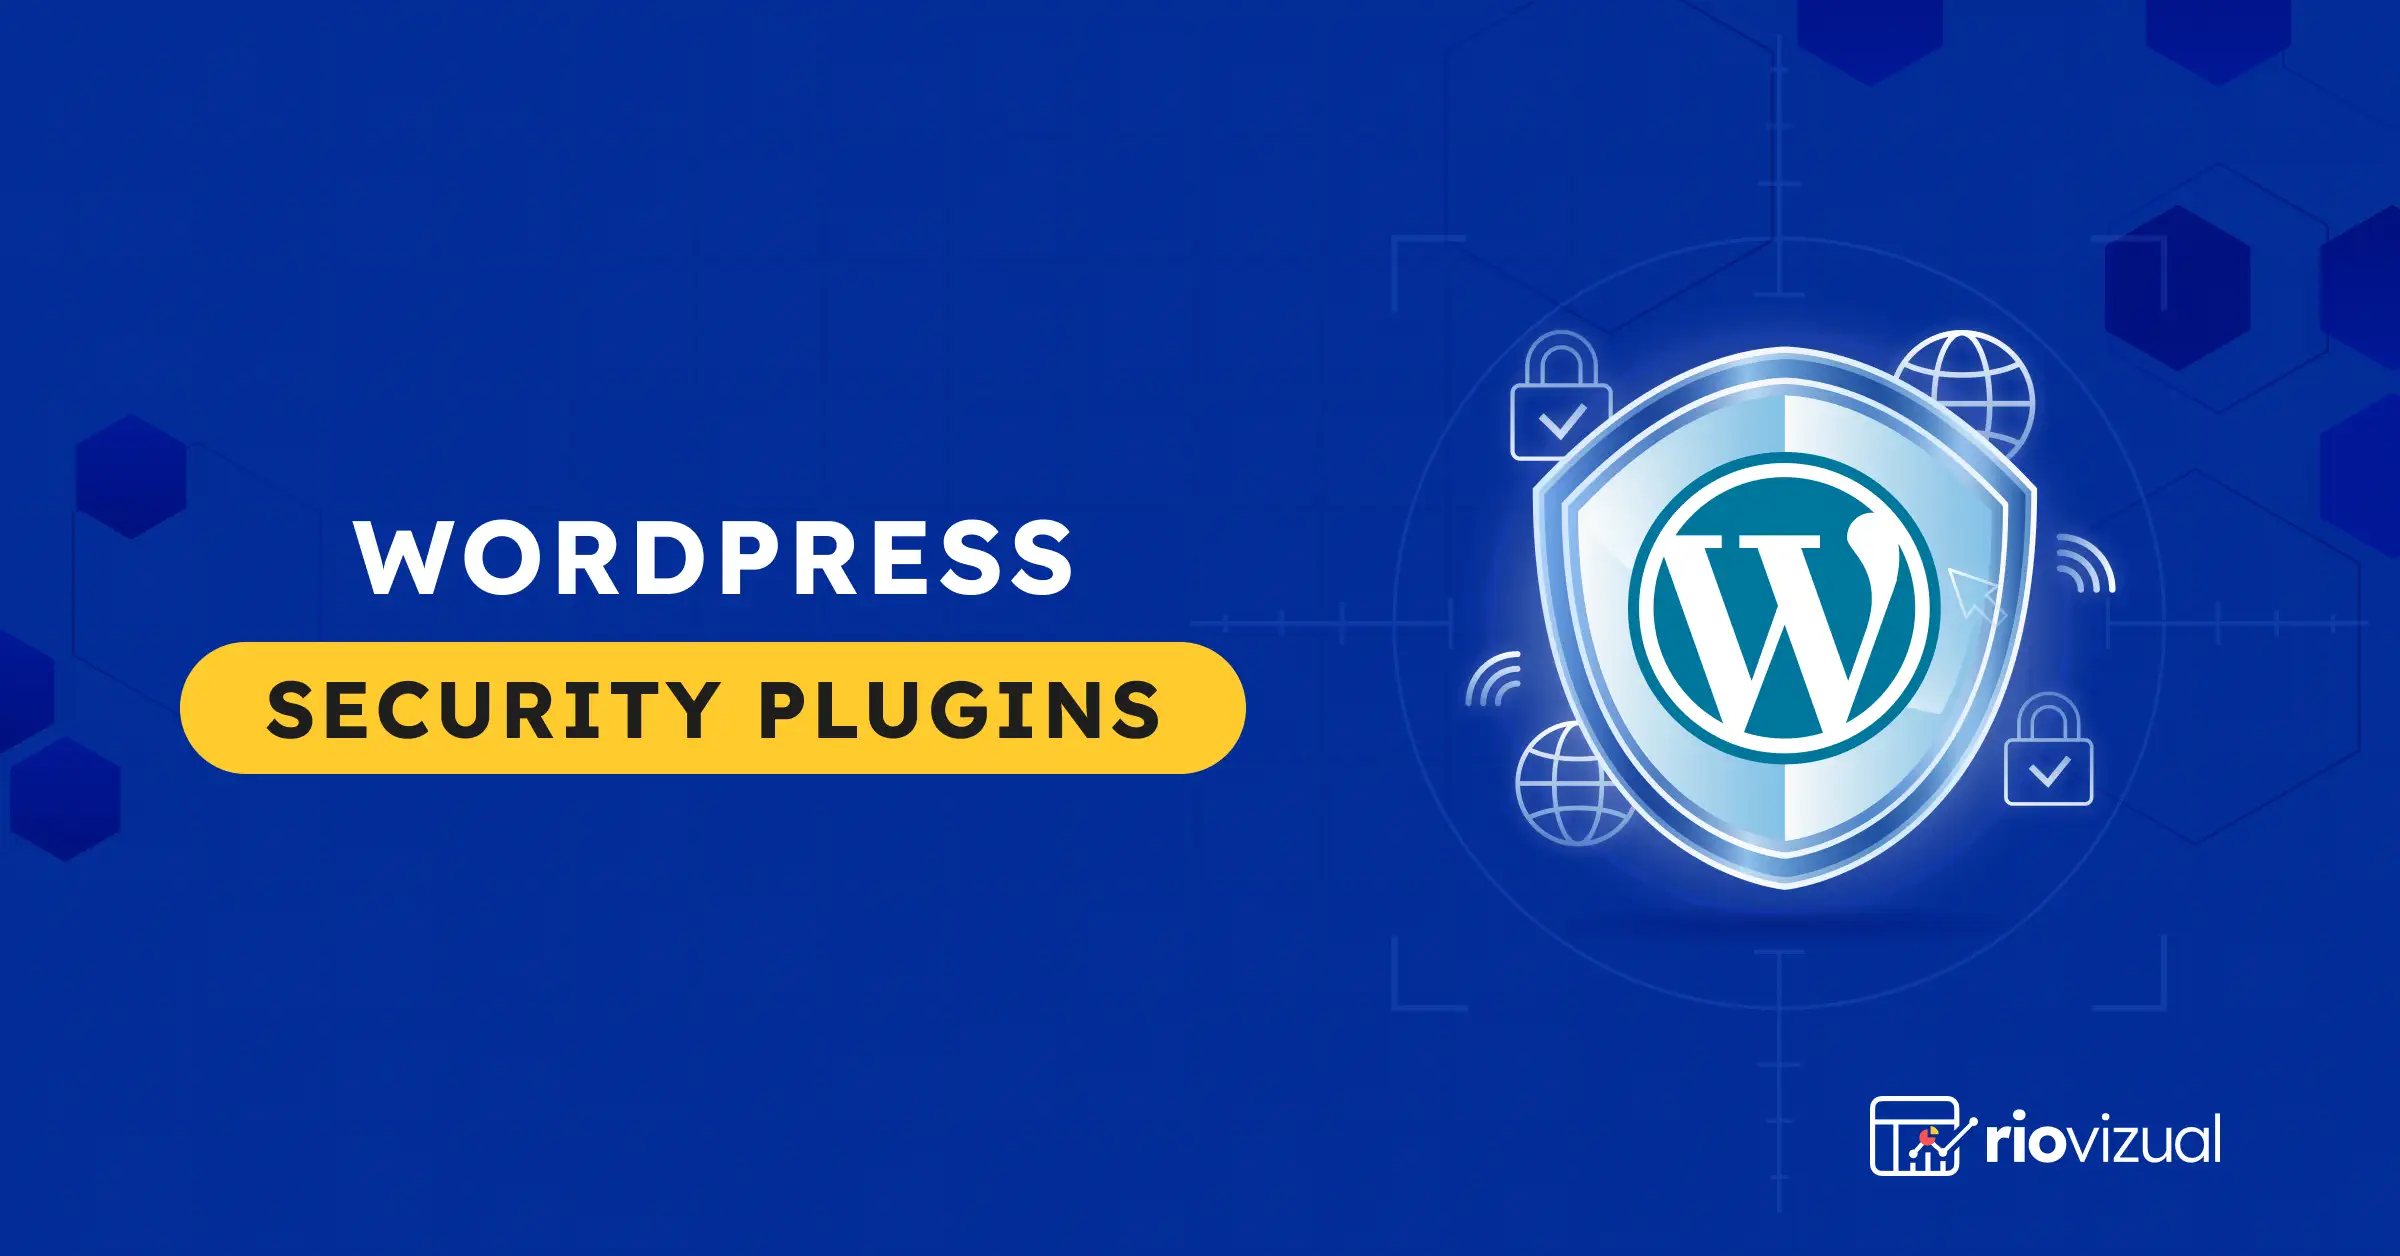 Best WordPress Security Plugins to Keep Your Website Safe